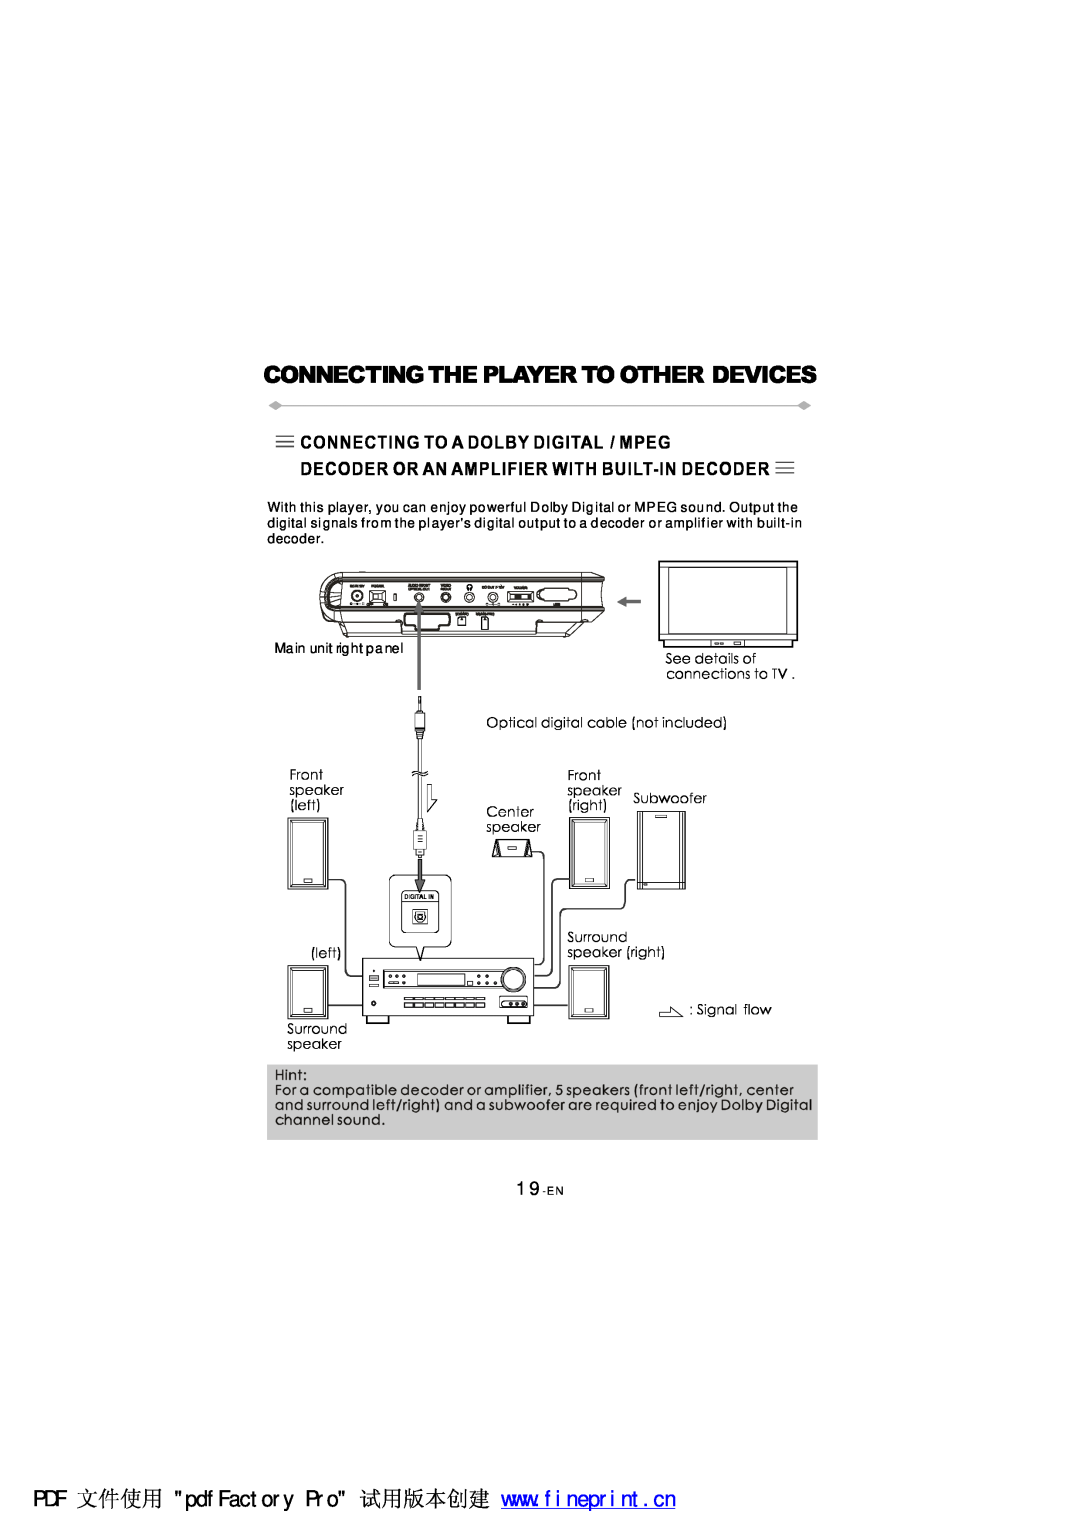 NextBase SDV97-AC manual Main unit right panel, 19-EN 